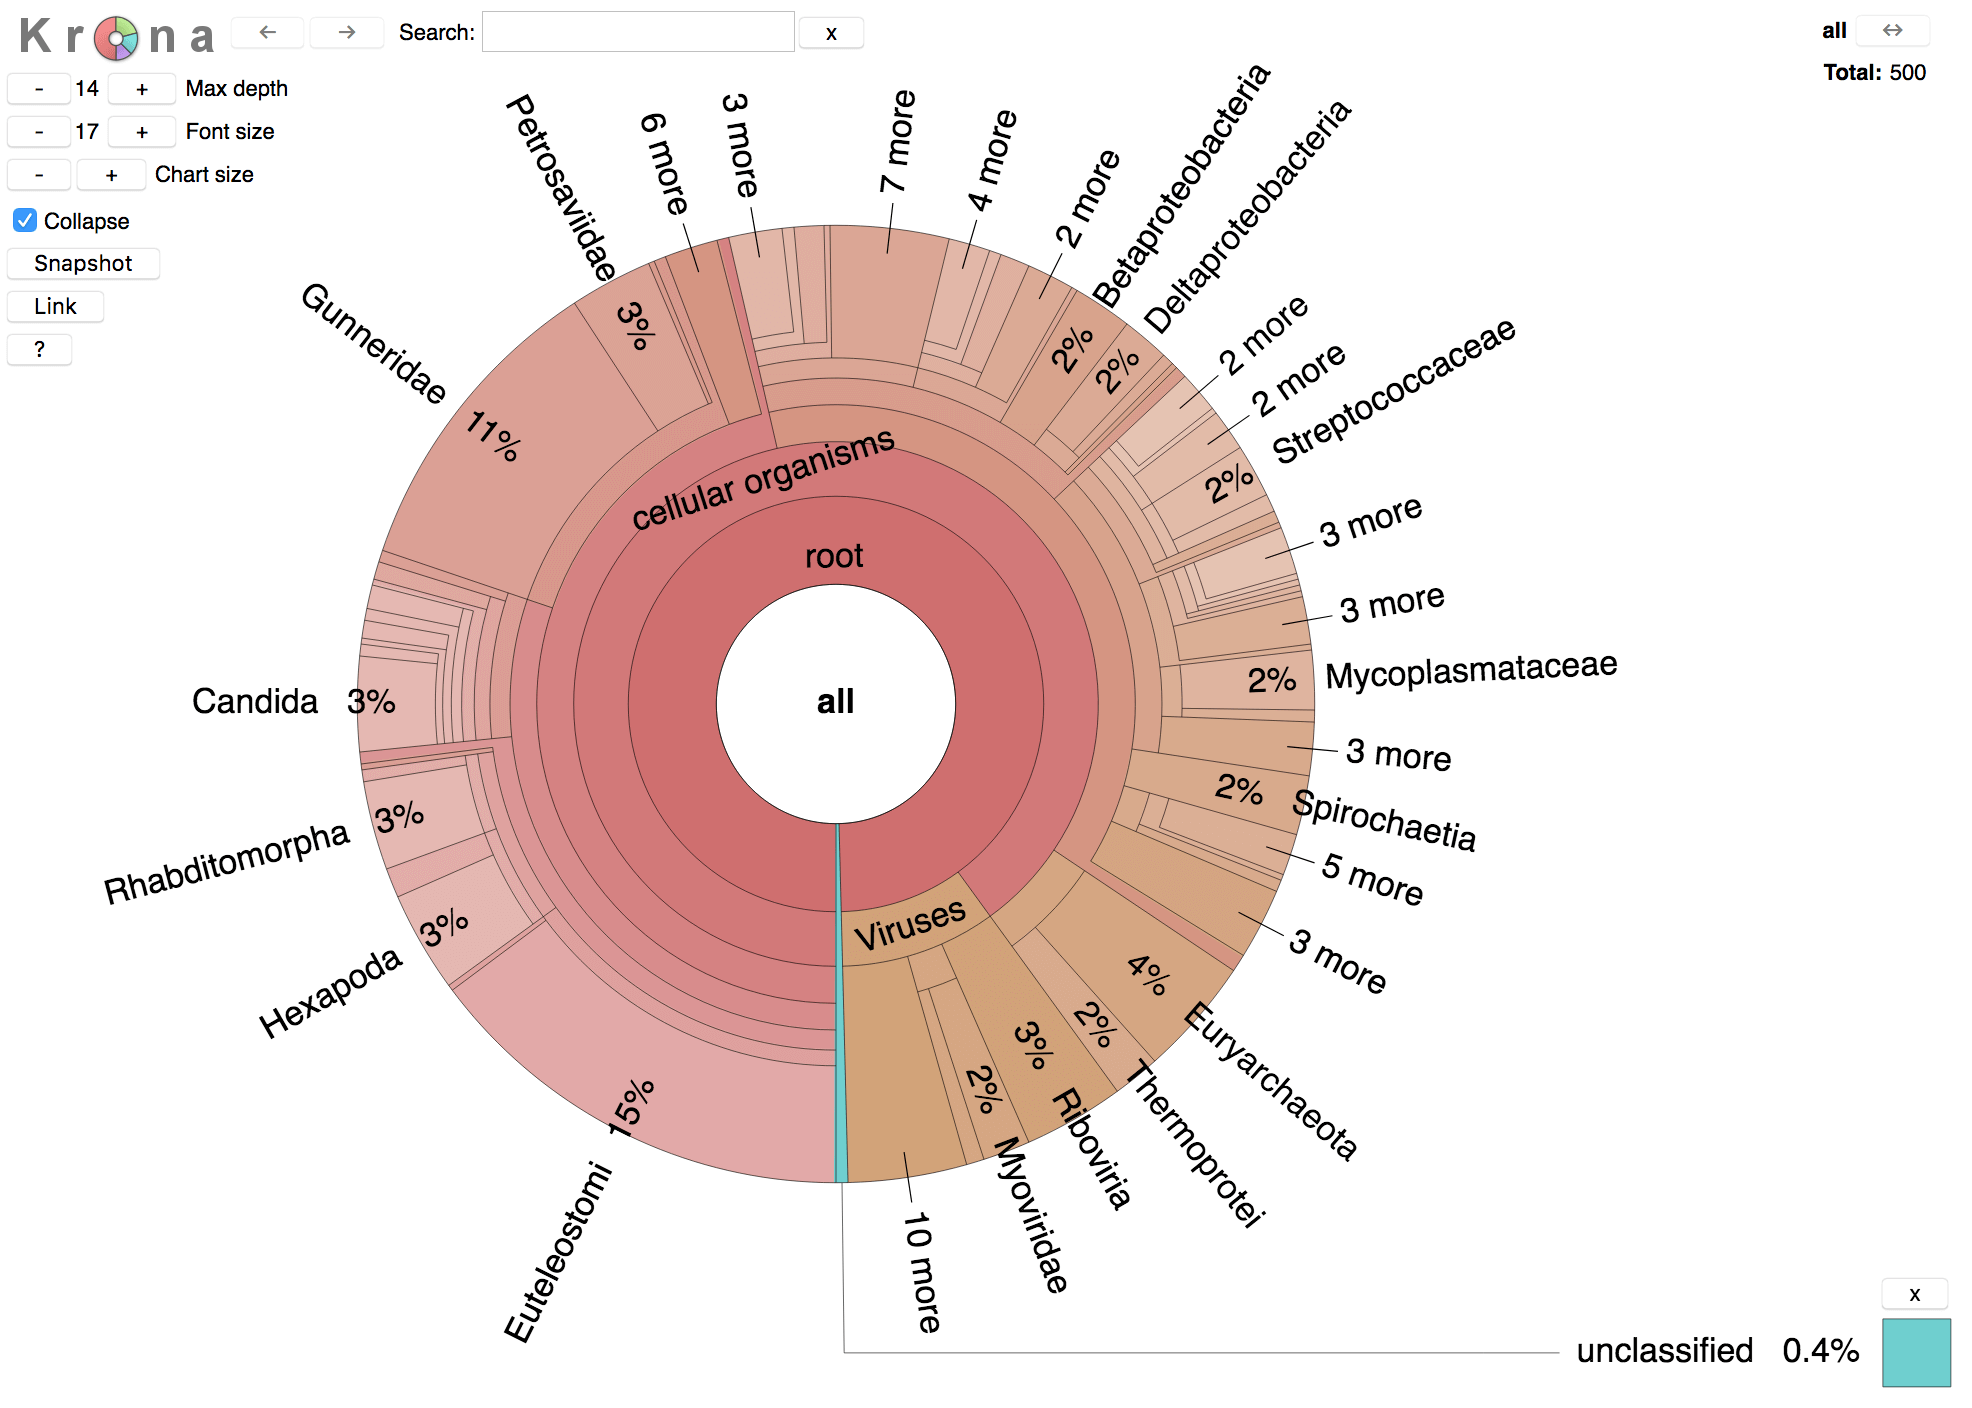 Screenshot of a Krona based taxonomy report